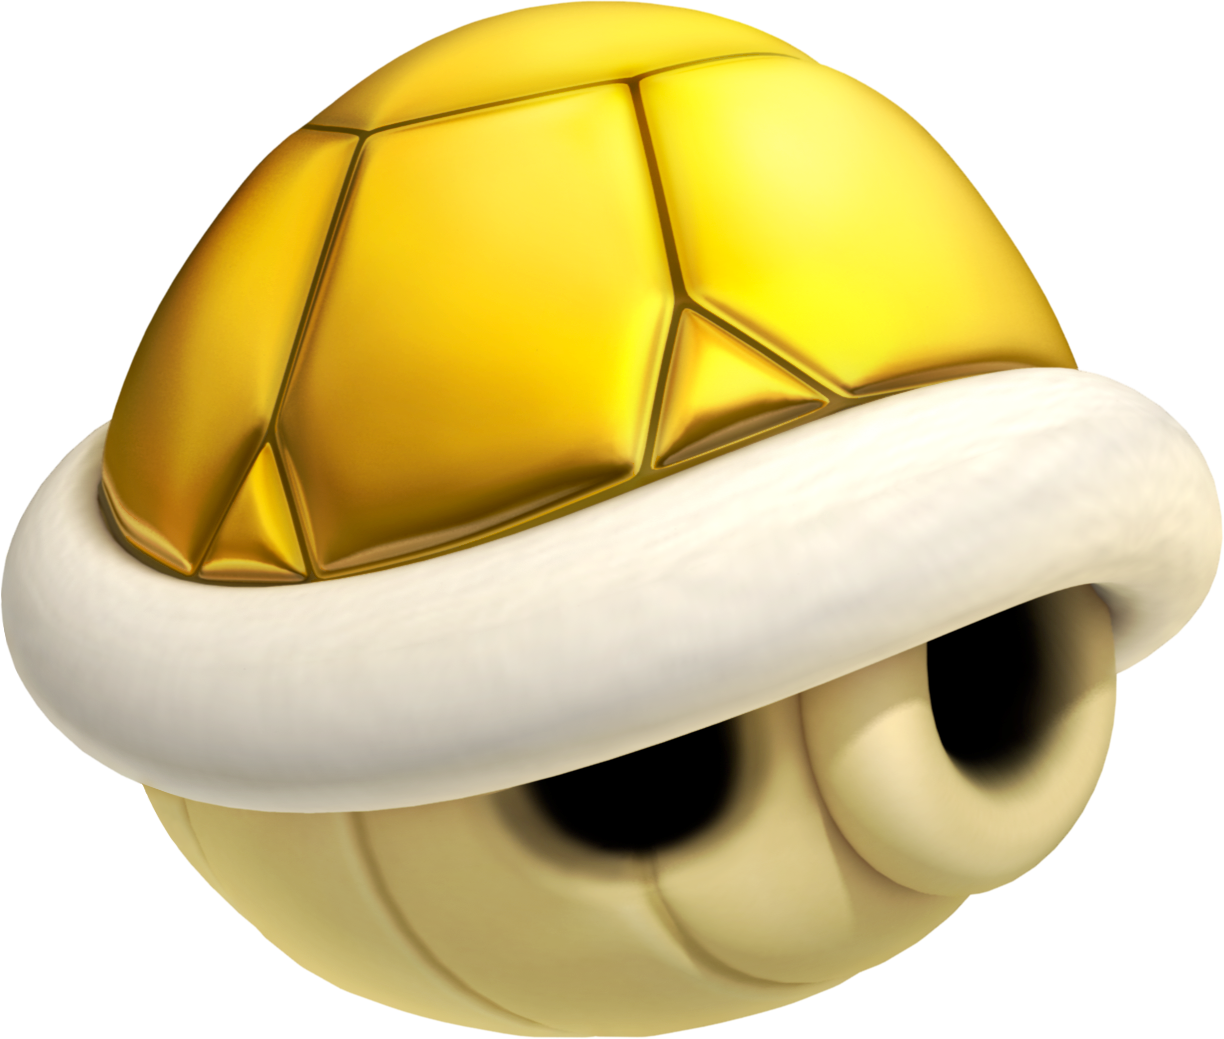 Koopa Troopa - Super Mario Wiki, the Mario encyclopedia